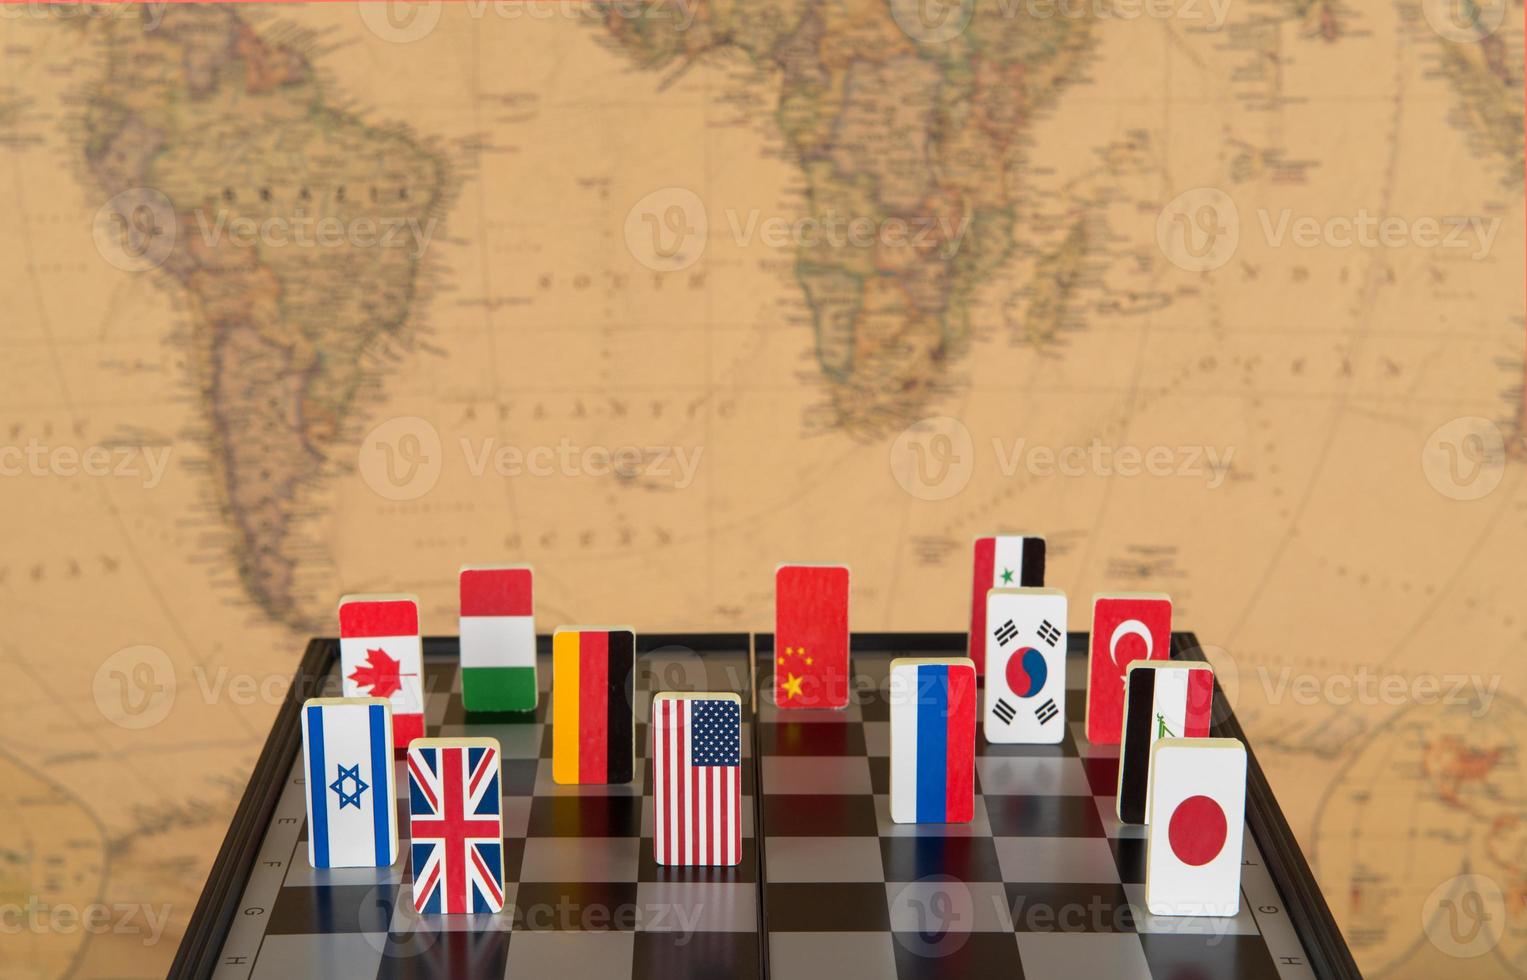 símbolos de países no tabuleiro de xadrez na perspectiva do mapa político do mundo. jogos políticos. foto